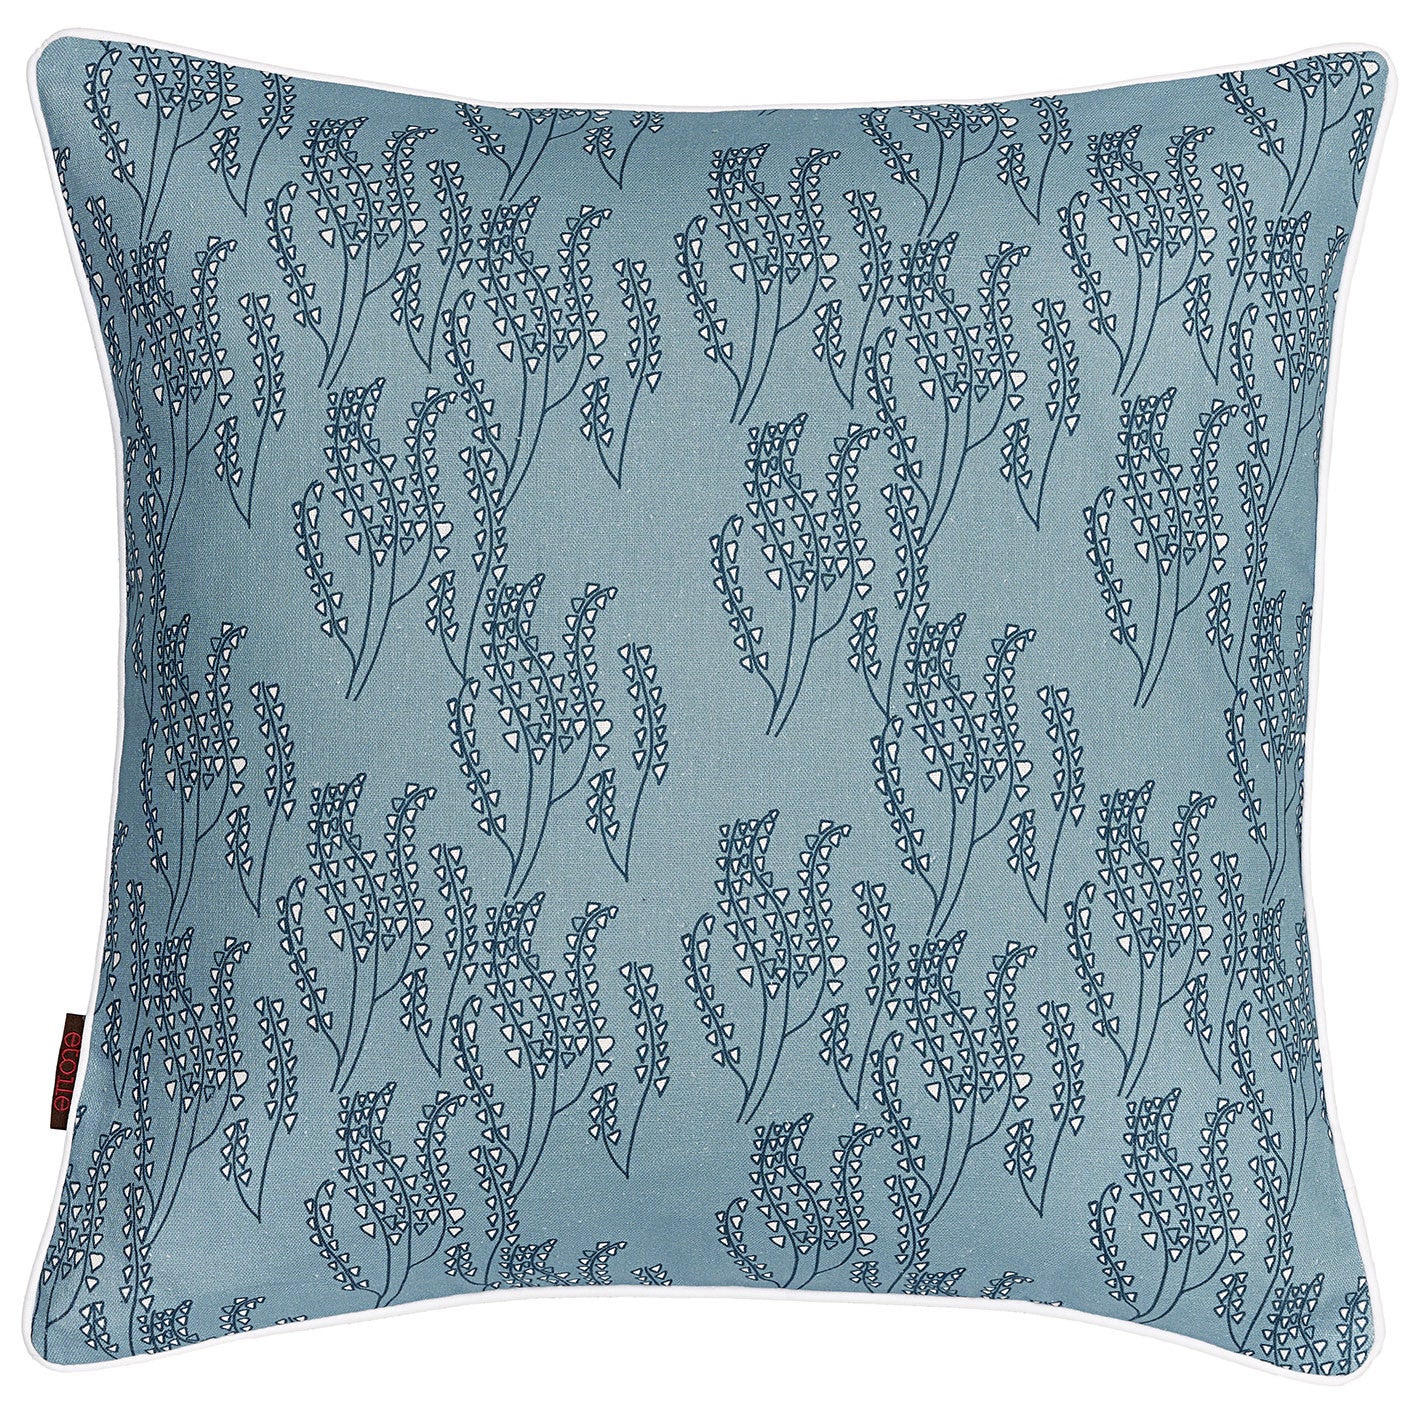 Maricopa Graphic Grass Pattern Linen Decorative Throw Pillow Light Chambray Blue 45x45cm (18x18")